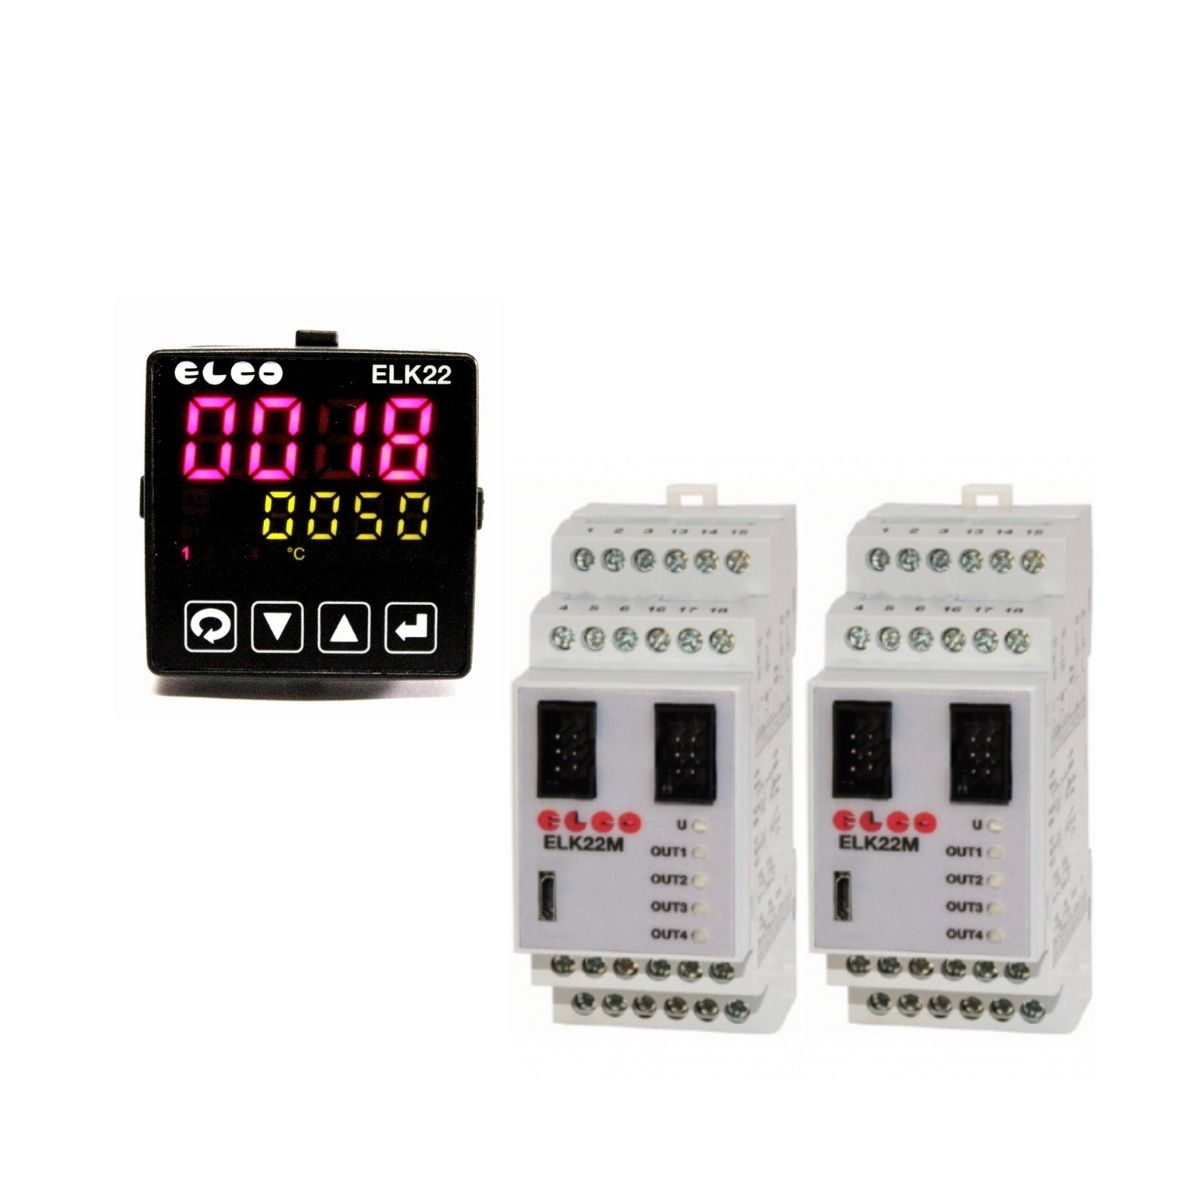 Elco ELK22MS Series Temperature Controllers